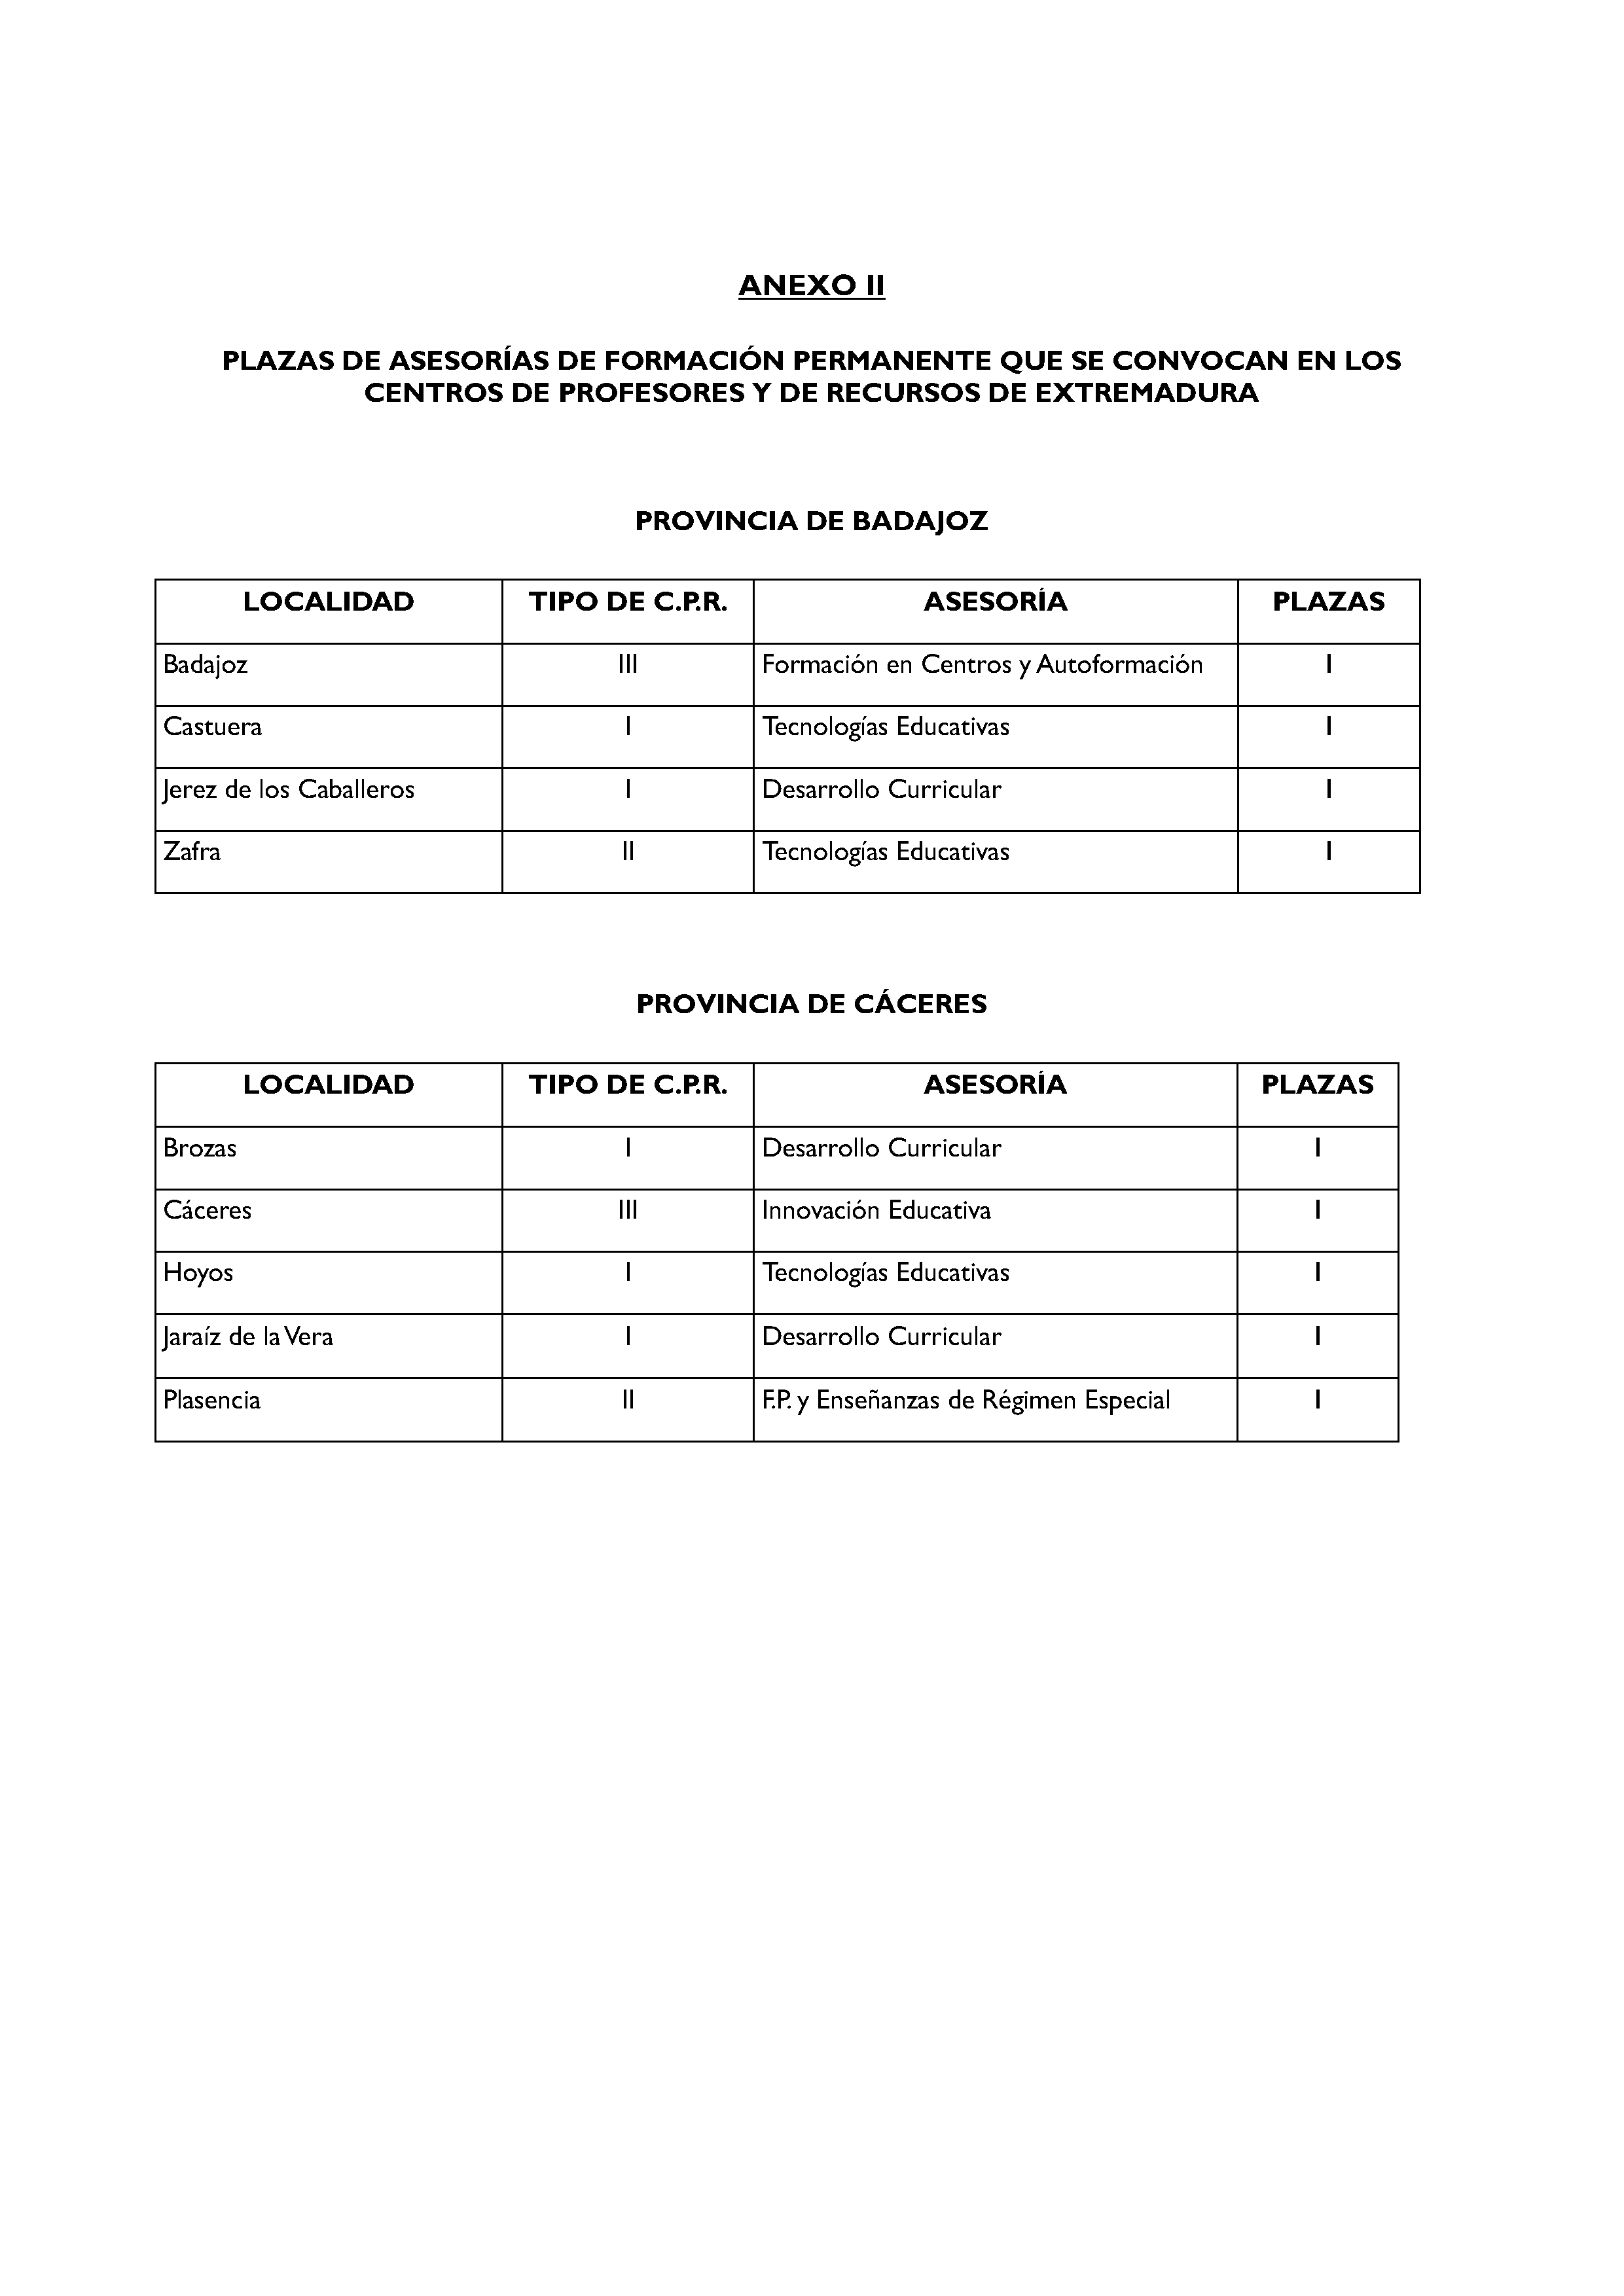 ANEXO II PLAZAS DE ASESORIAS DE FORMACION PERMANENTE Pag 5